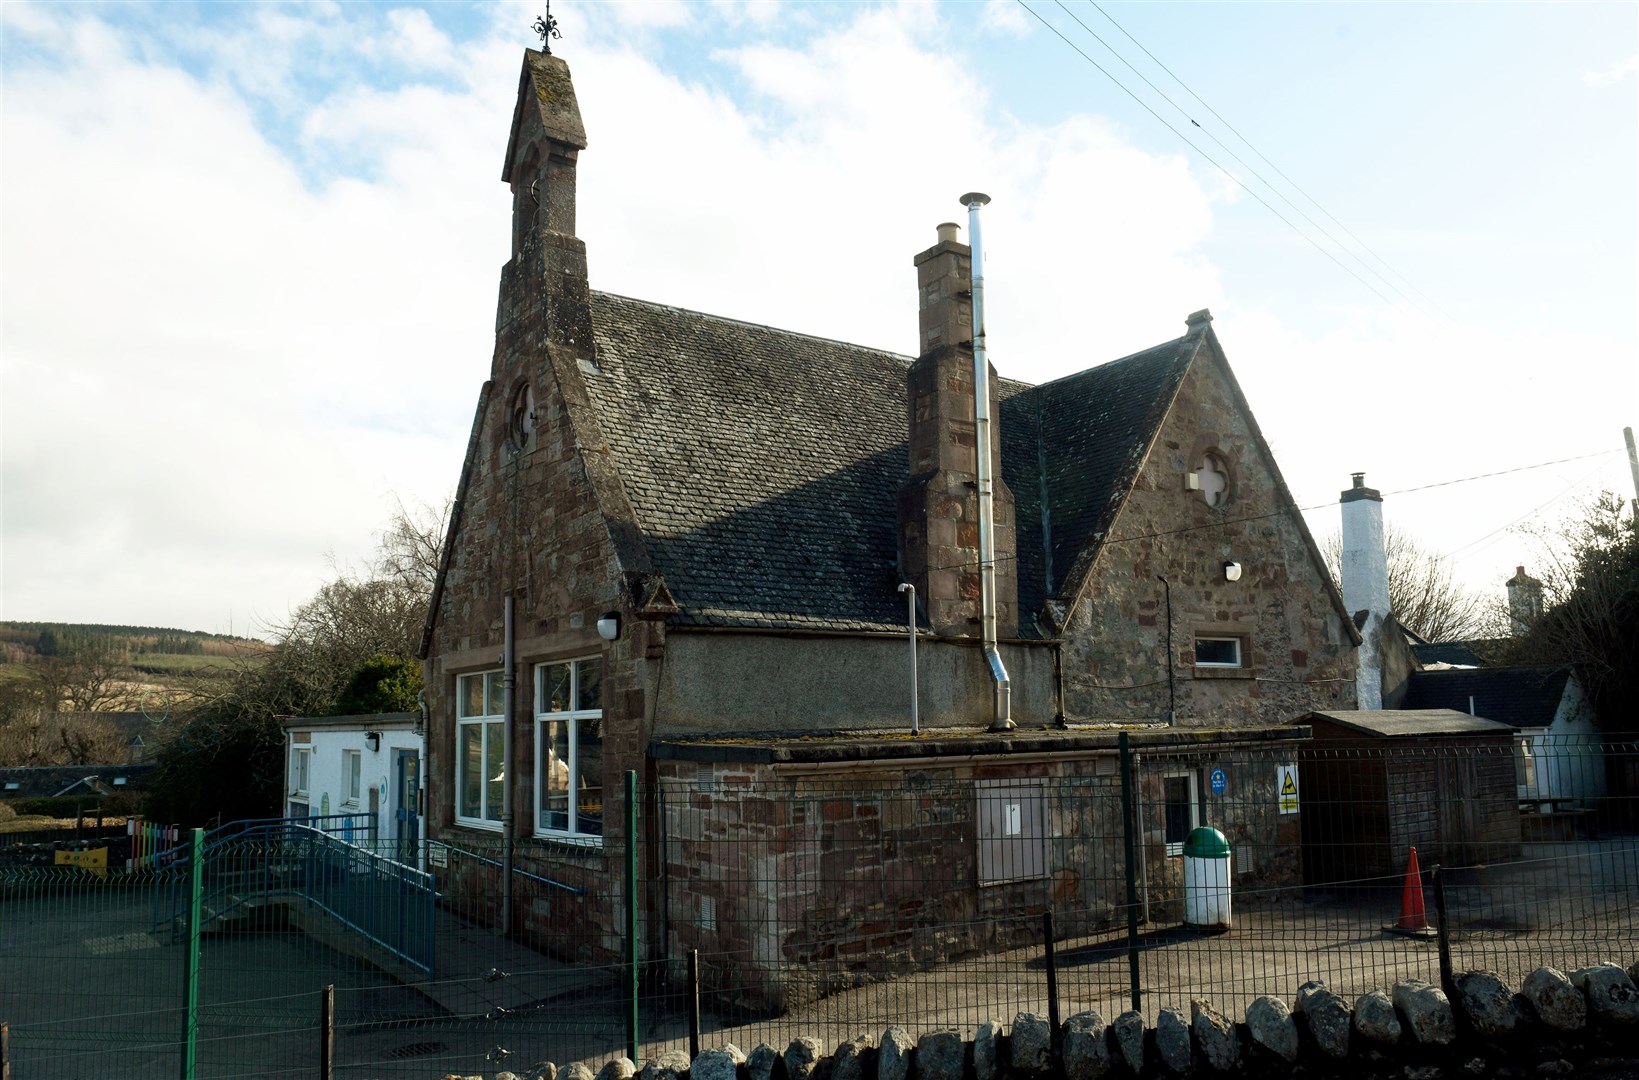 Munlochy Primary School. Picture: James Mackenzie.